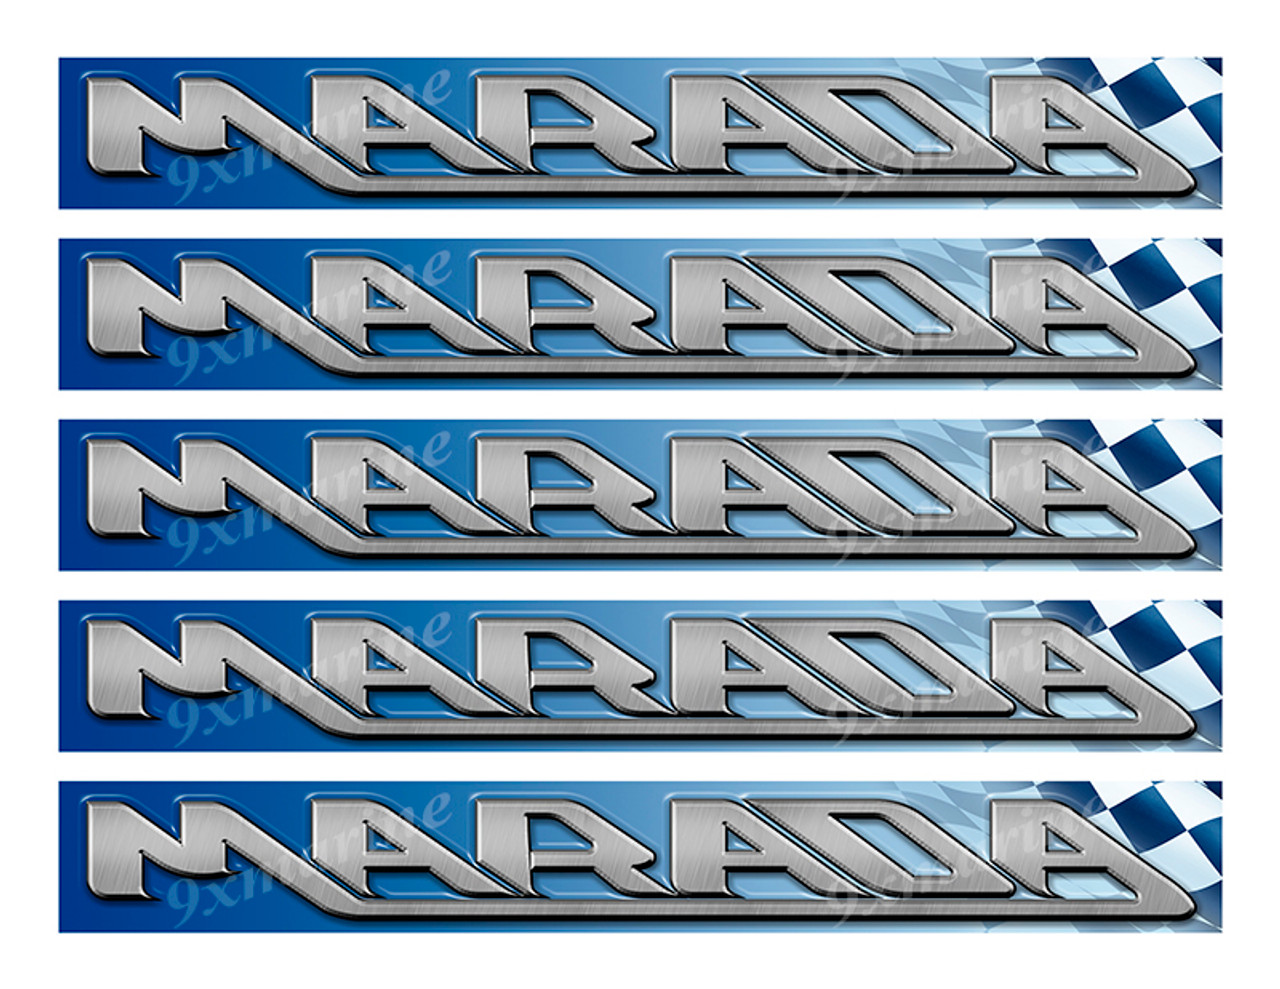 Marada Boat Racing Sticker Set - 10"x1.5" each